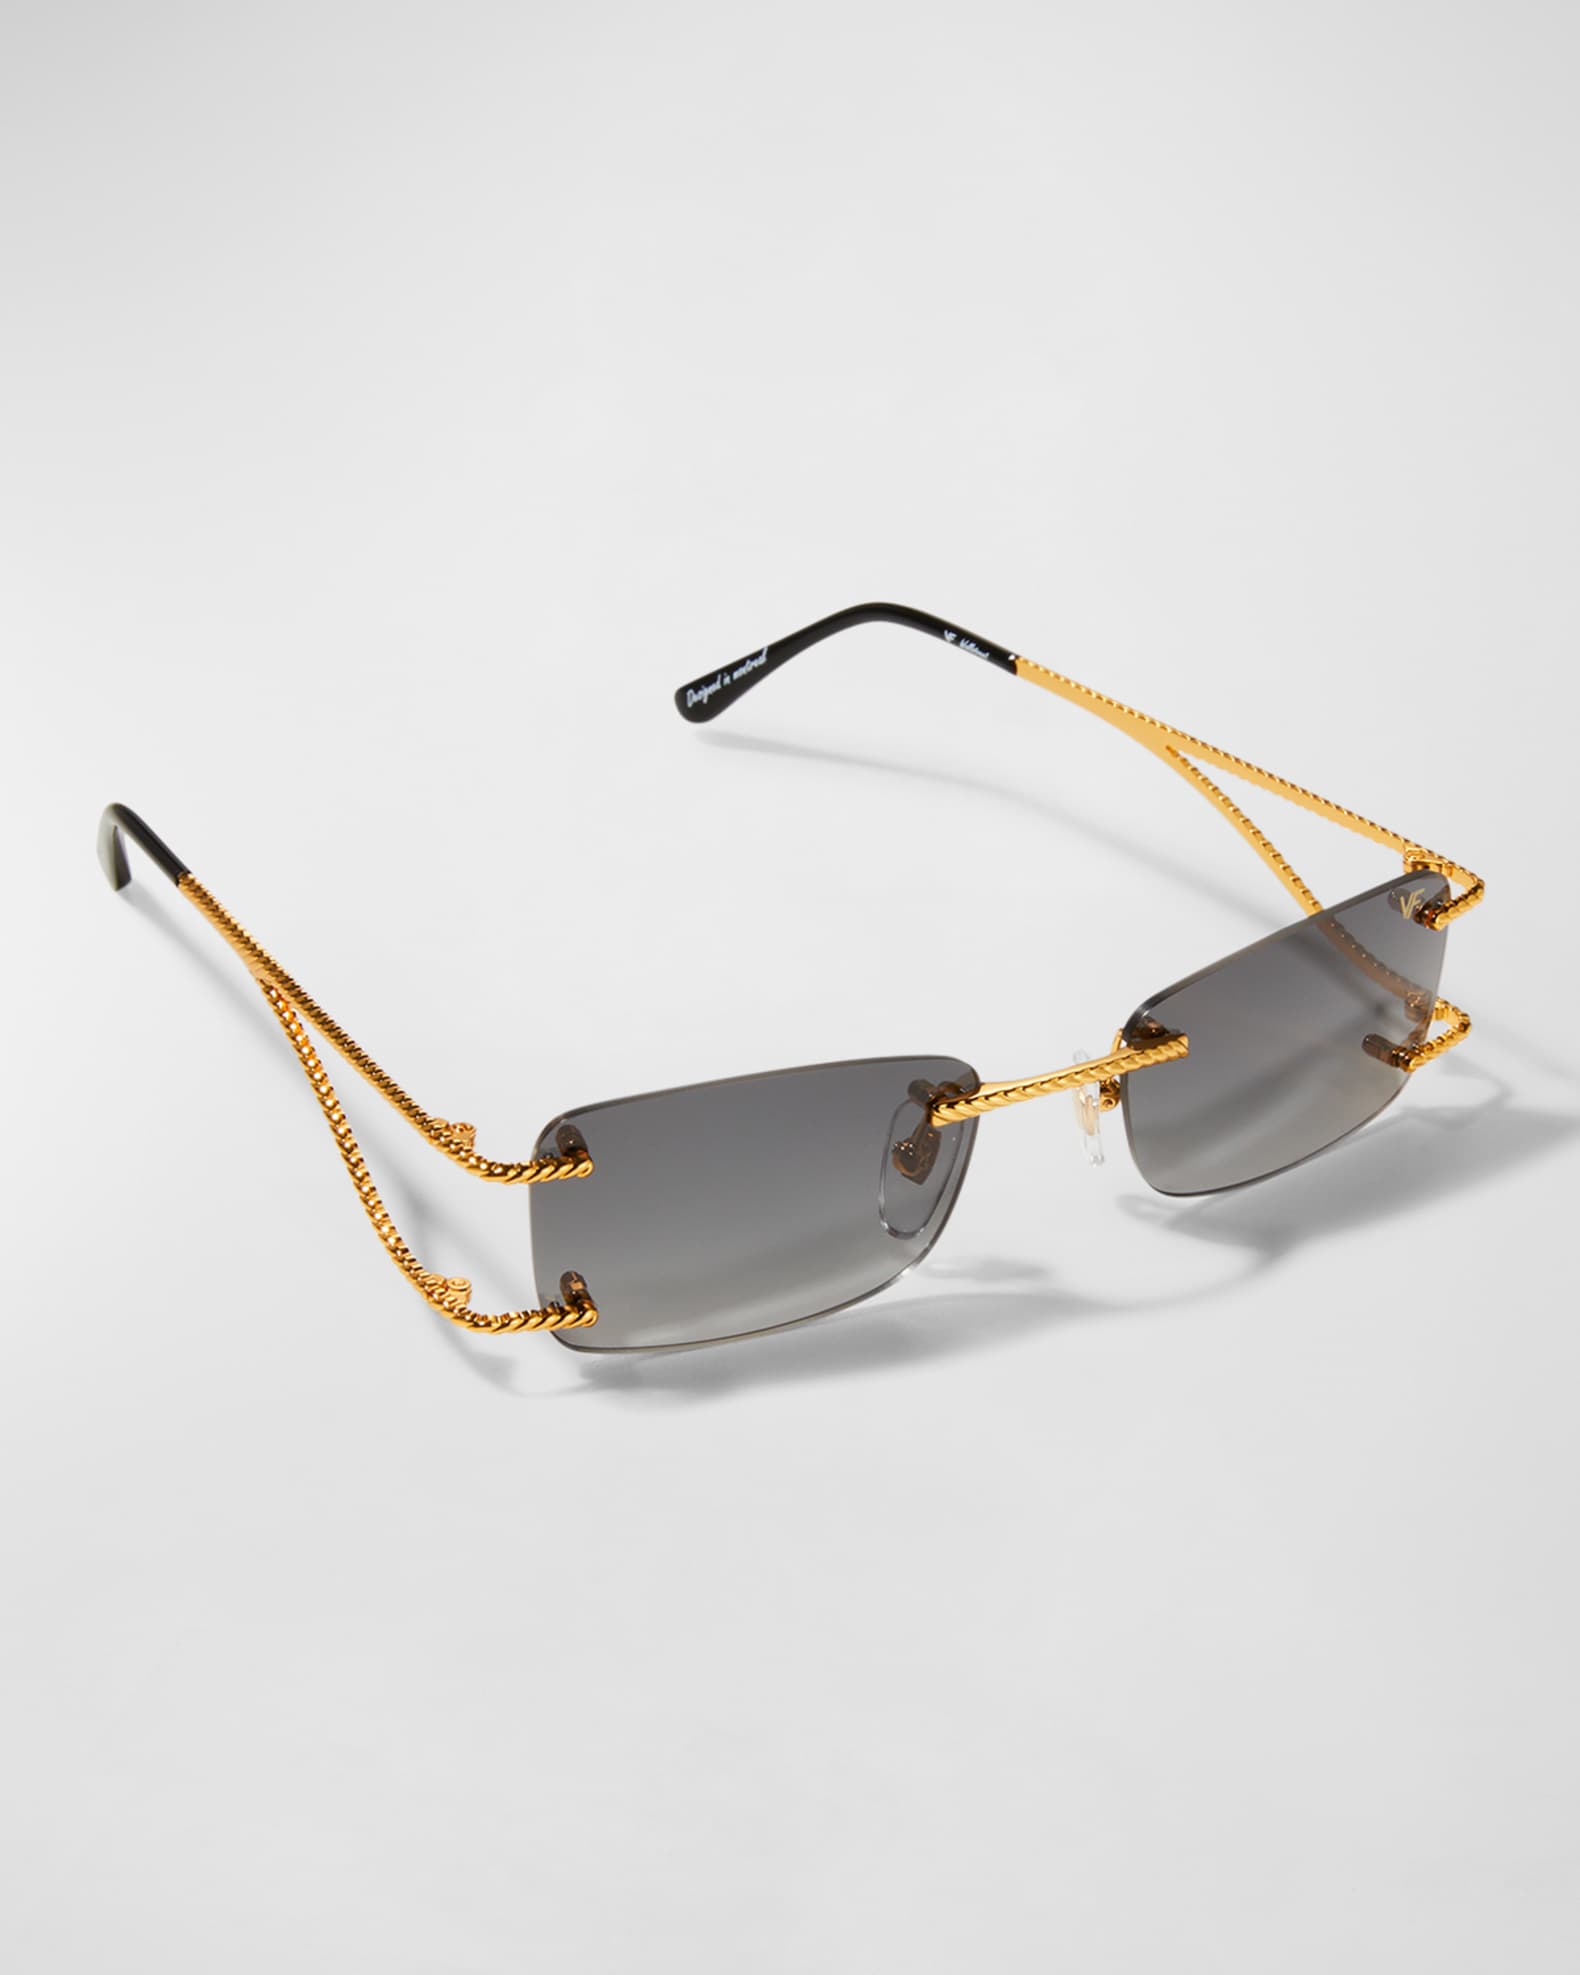 Vintage Frames Company Men's VF Wall Street Rectangle Rimless Sunglasses, Black/Gold, Men's, Sunglasses Square Sunglasses